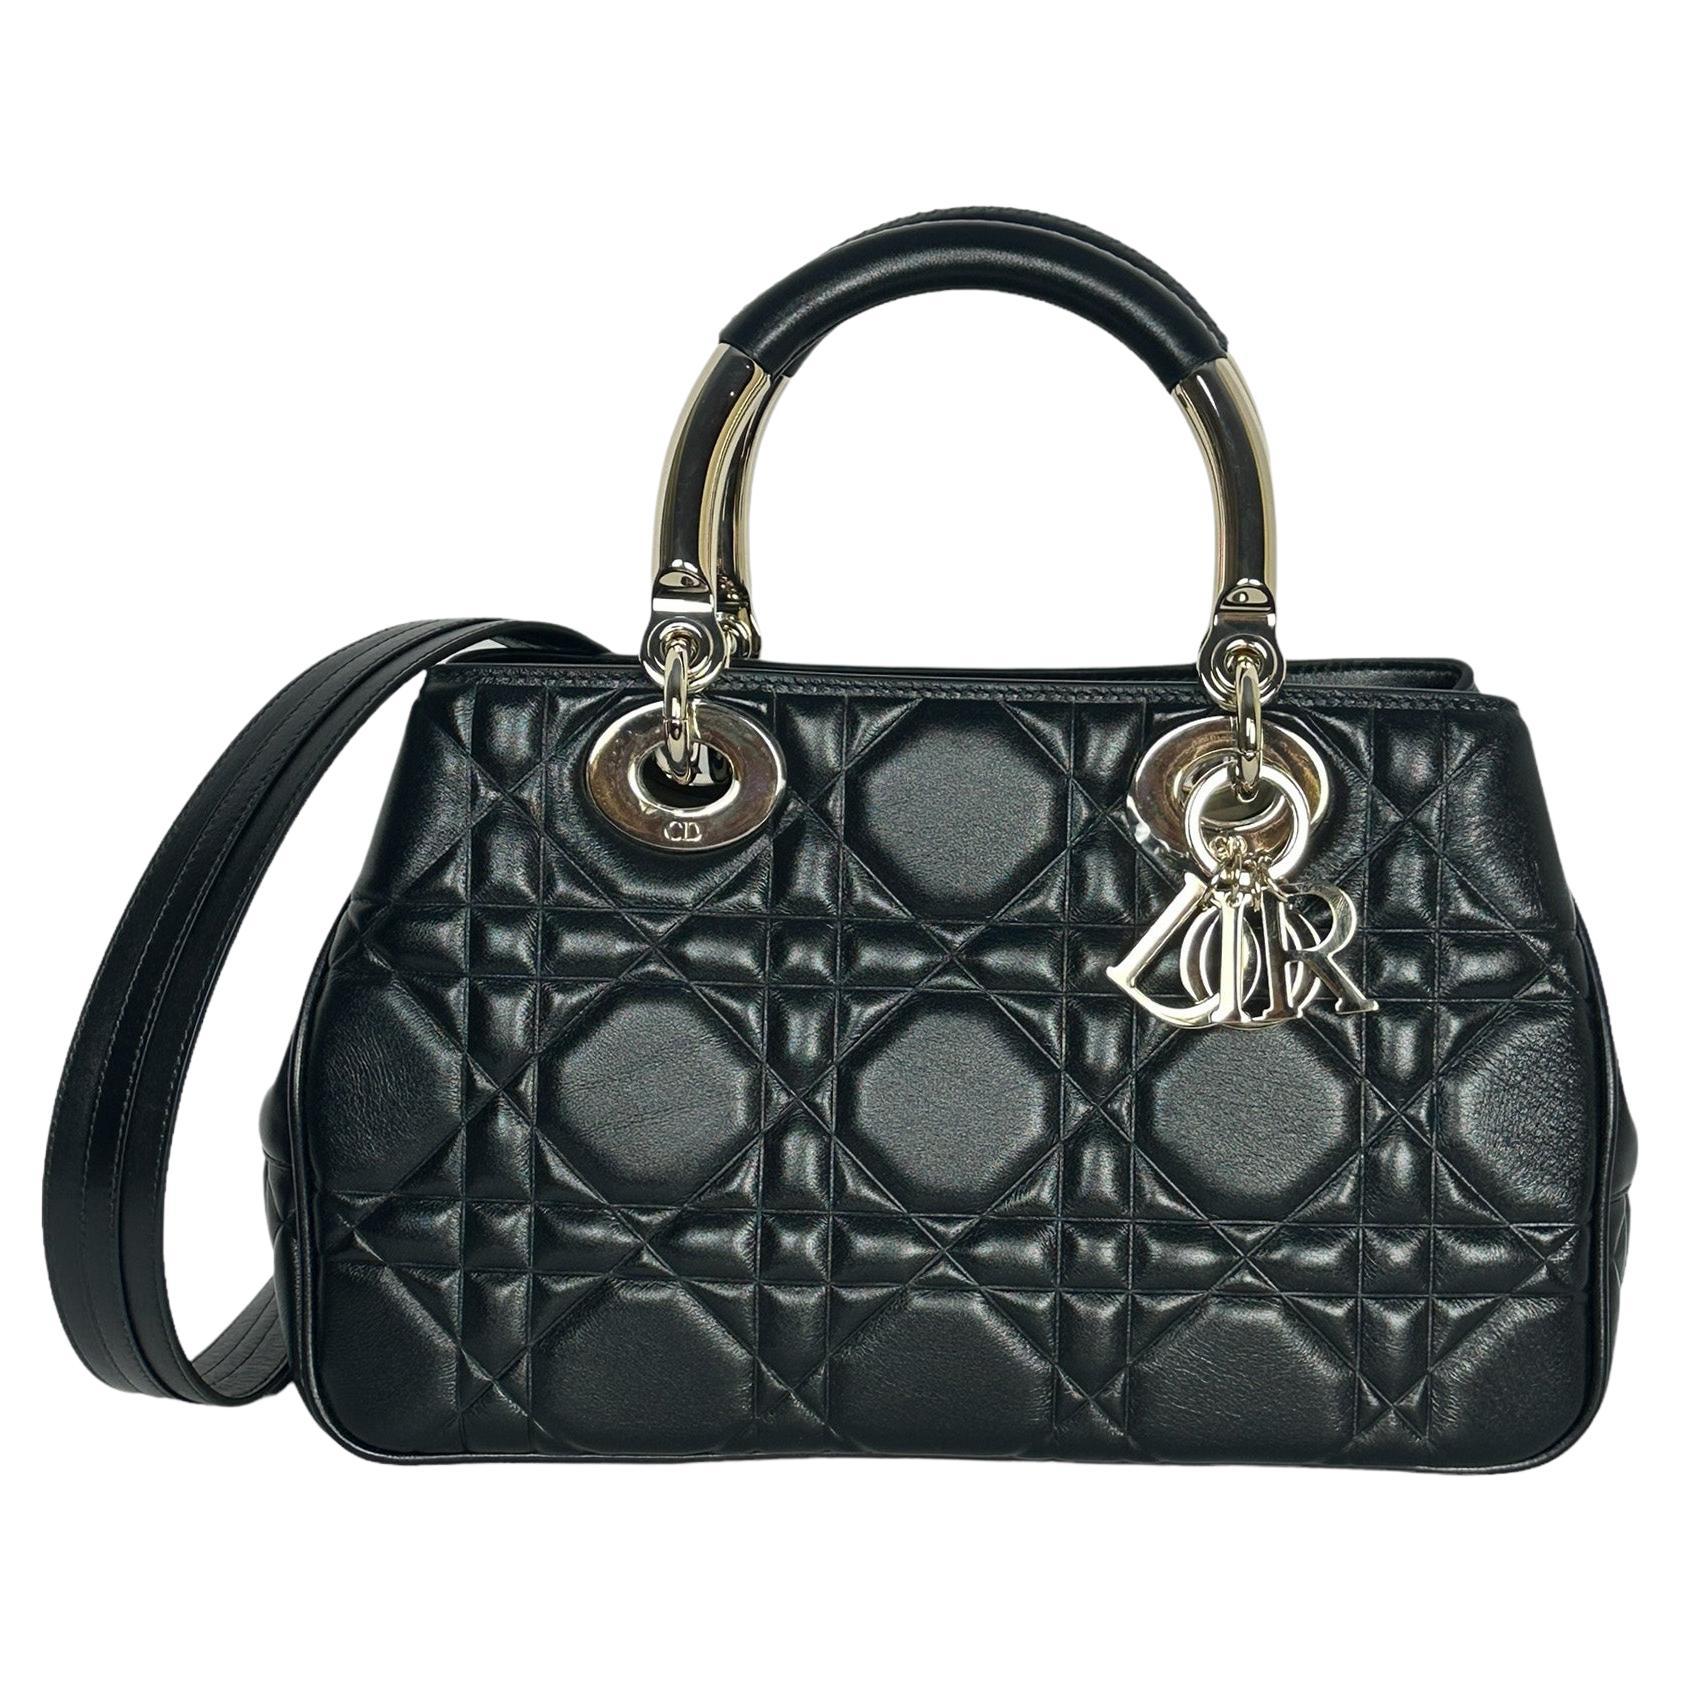 Christian Dior Cannage Schwarze gesteppte The Lady 95.22 Tasche aus Leder rt. $7200 im Angebot